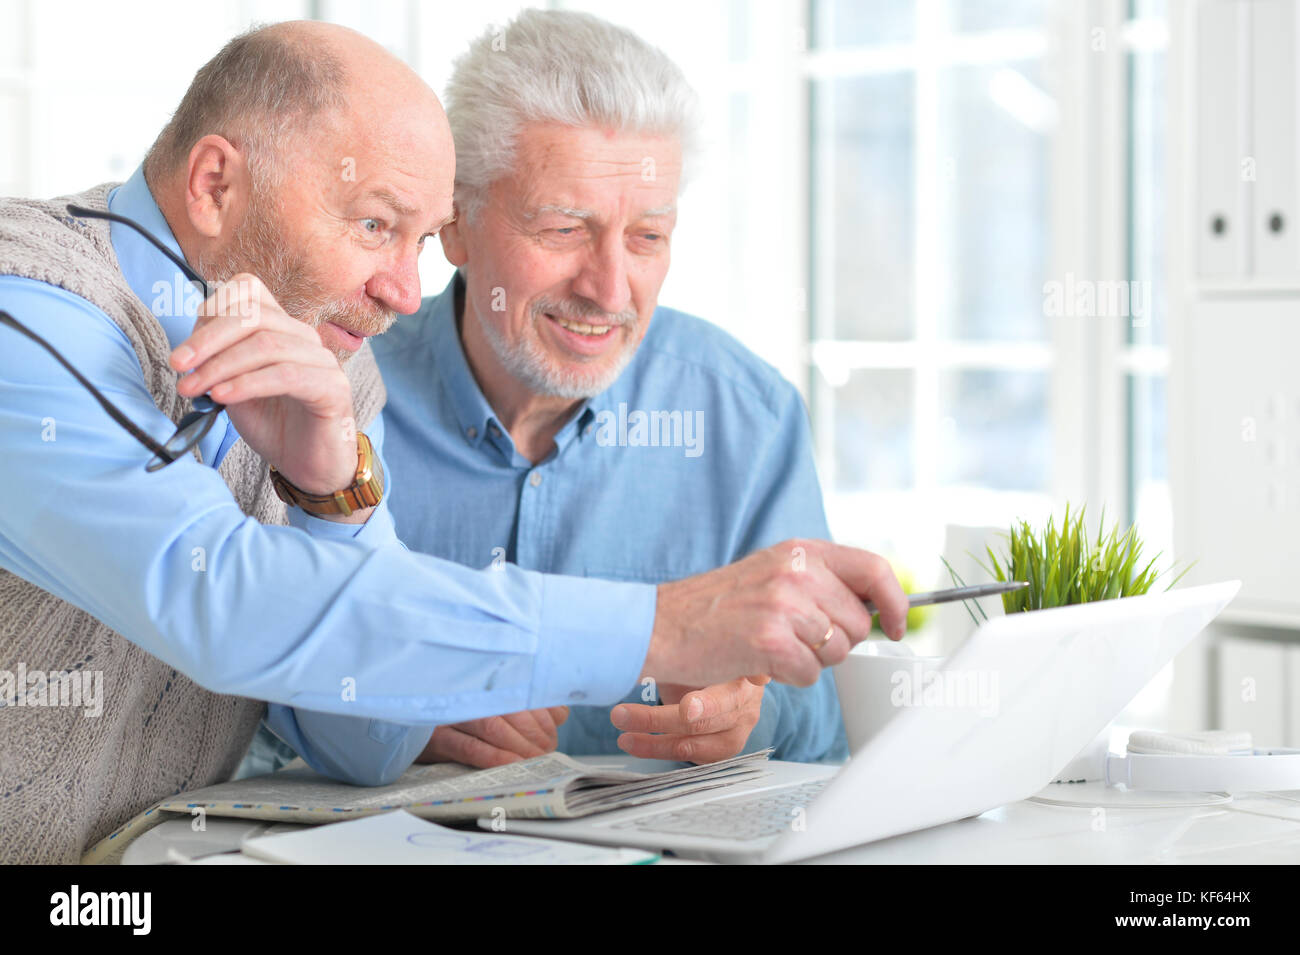 men working on laptop Stock Photo